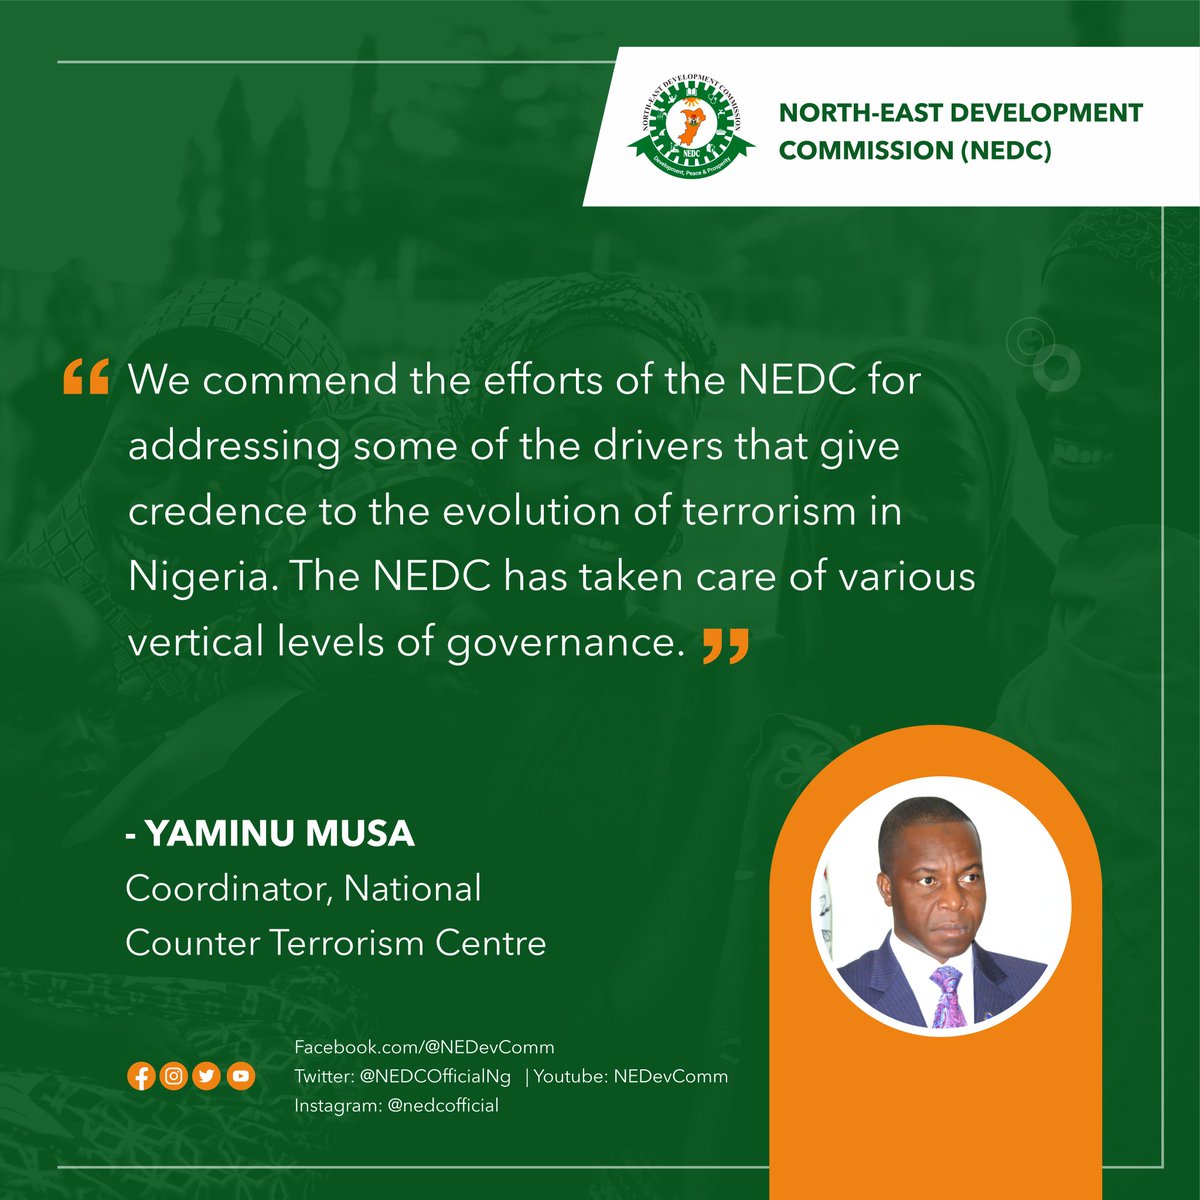 NEDC has taken care of various vertical levels of governance - Yaminu Musa.
#NorthEast 
#BuildingBackBetter 
#NEDC 
#NorthEastDevelopment